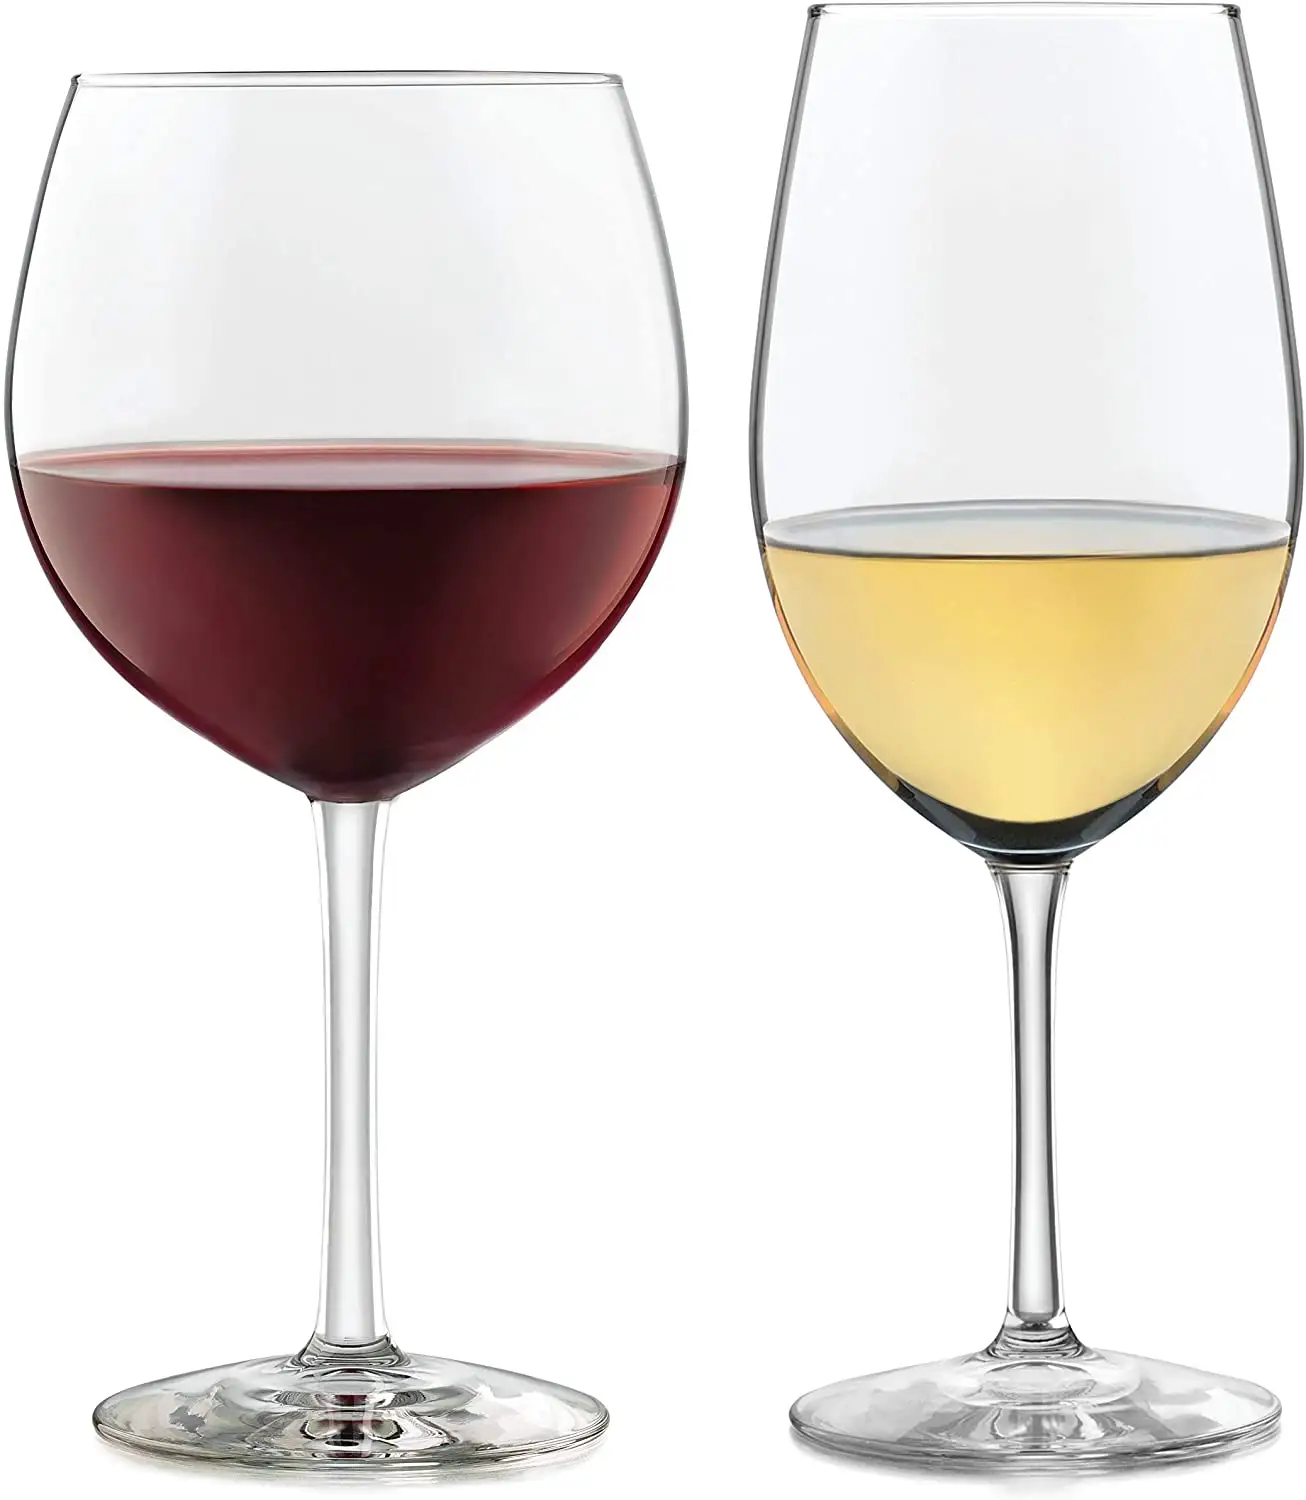 RTL ไร่องุ่นสำรองชุดแก้วไวน์12ชิ้นสำหรับ Chardonnay และ Merlot/บอร์โดซ์